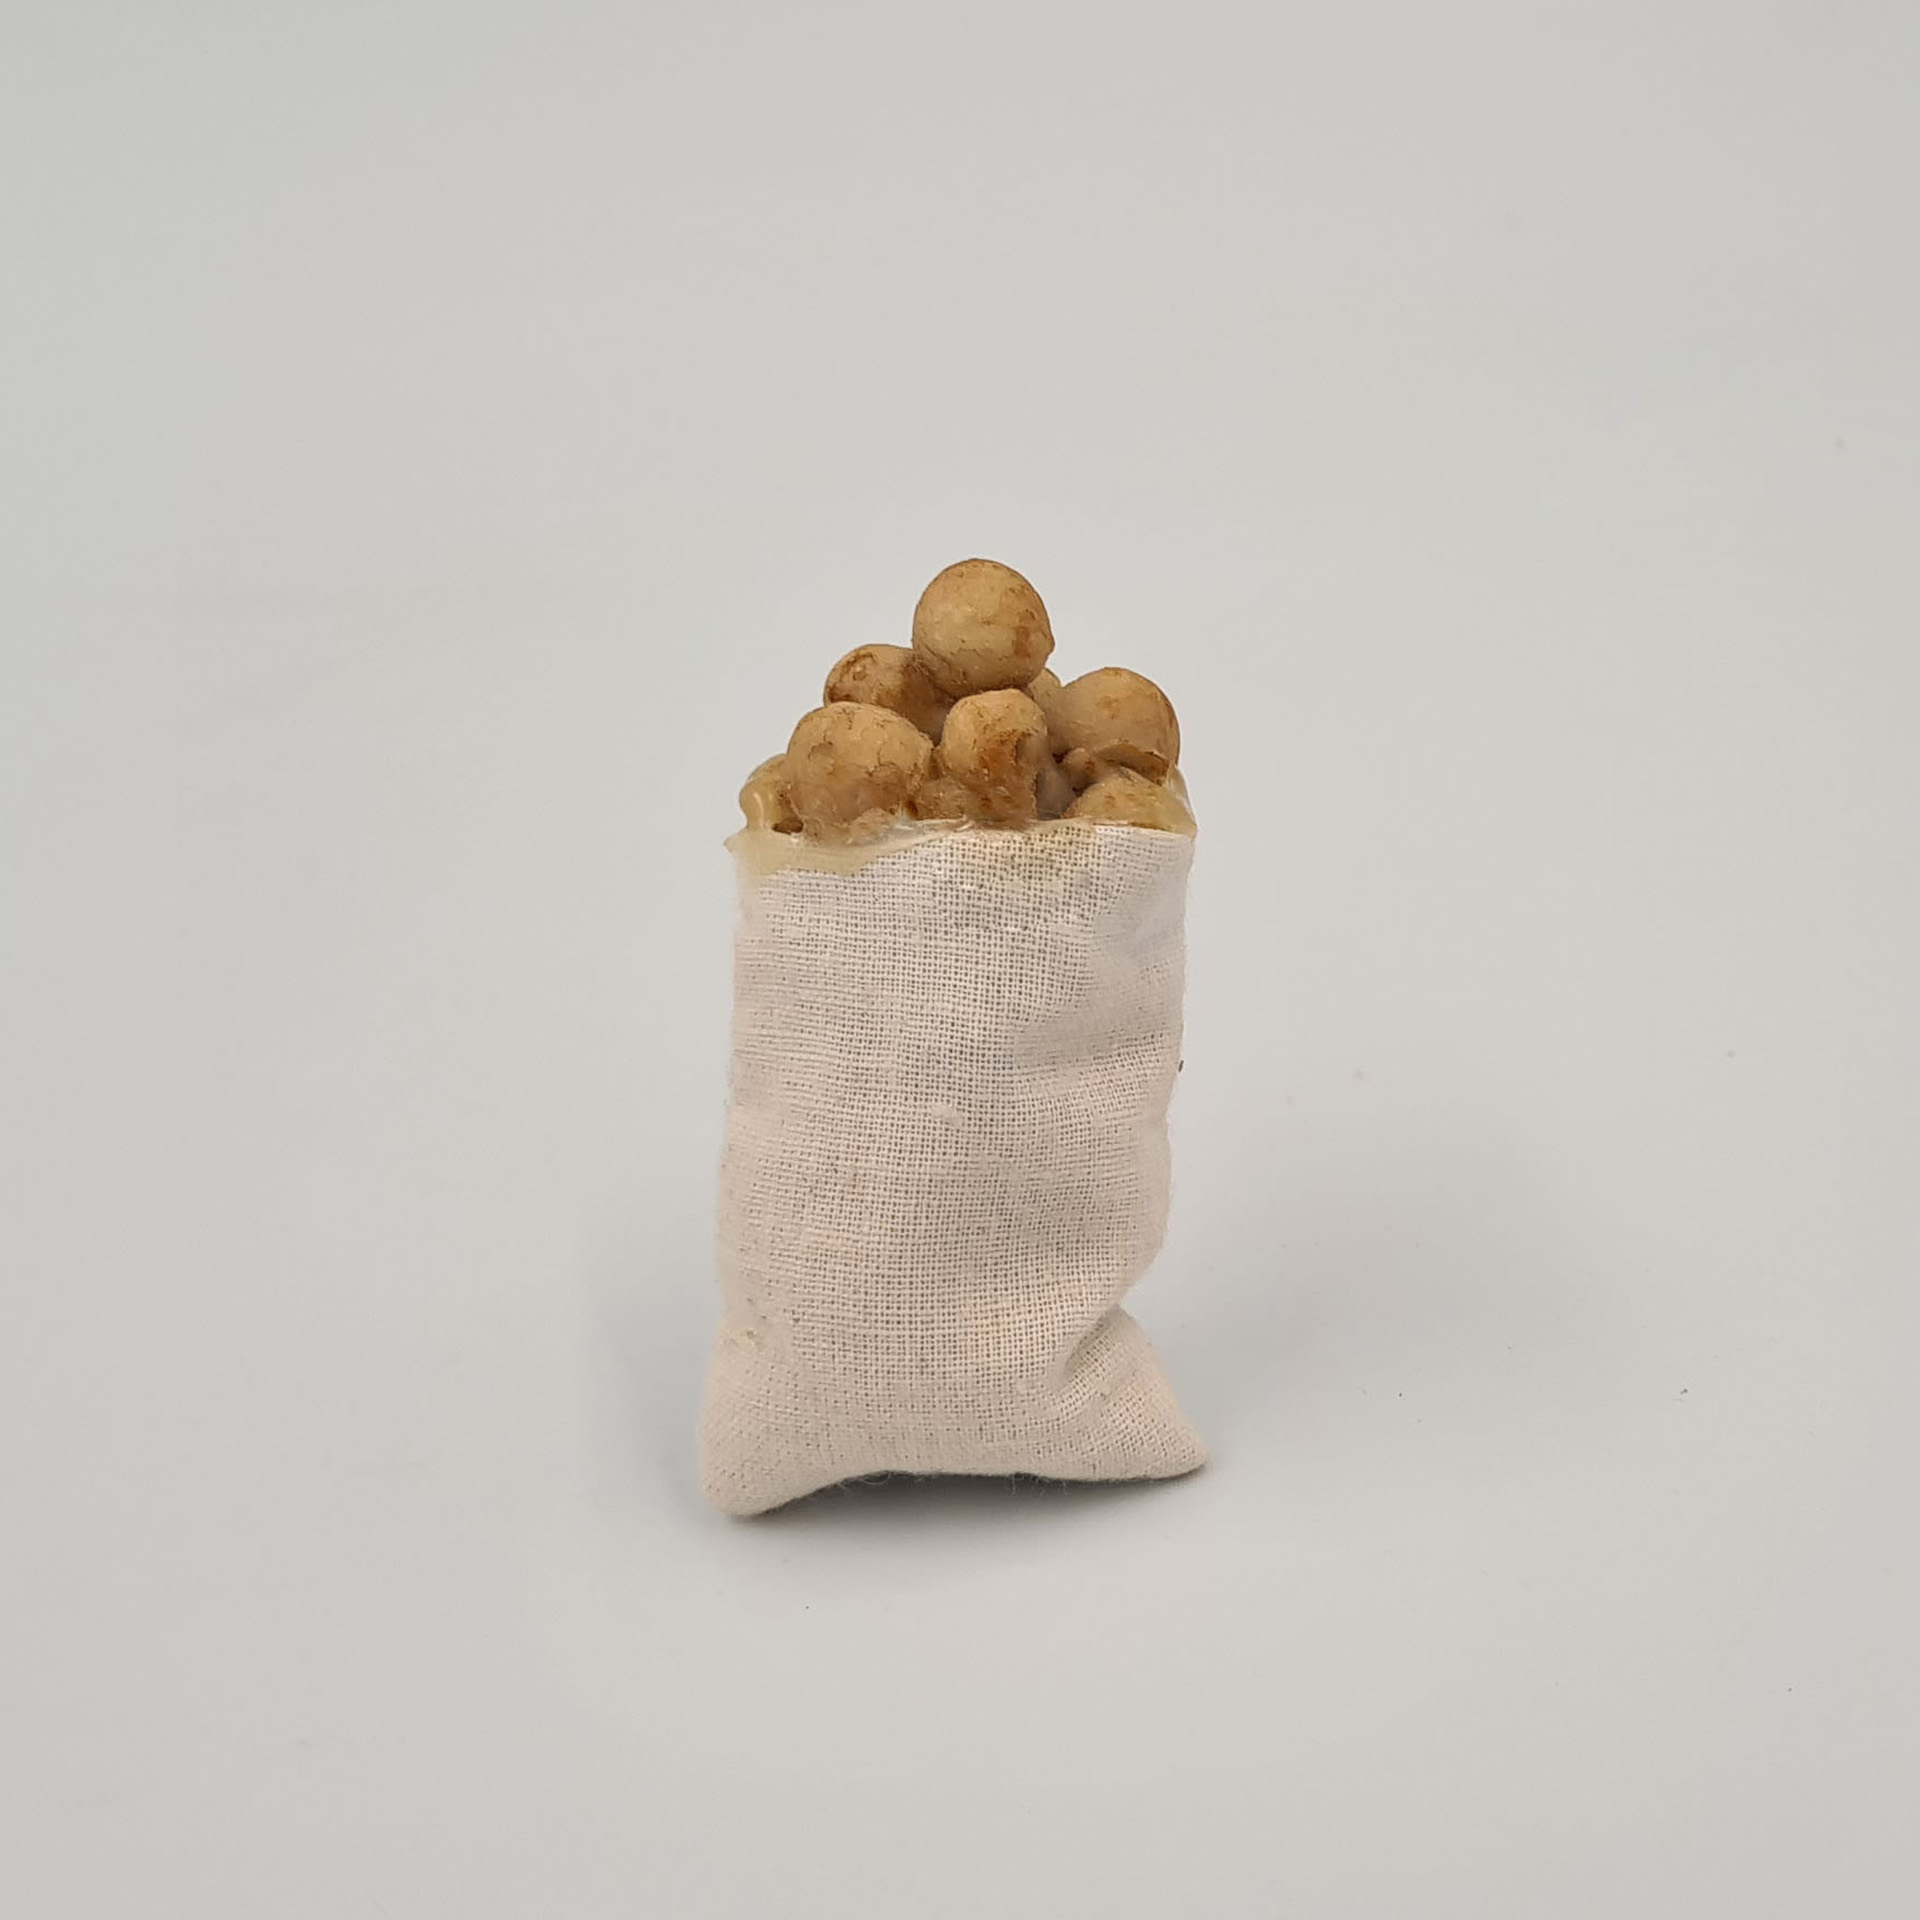 Kartoffelsack gefüllt Krippenzubehör